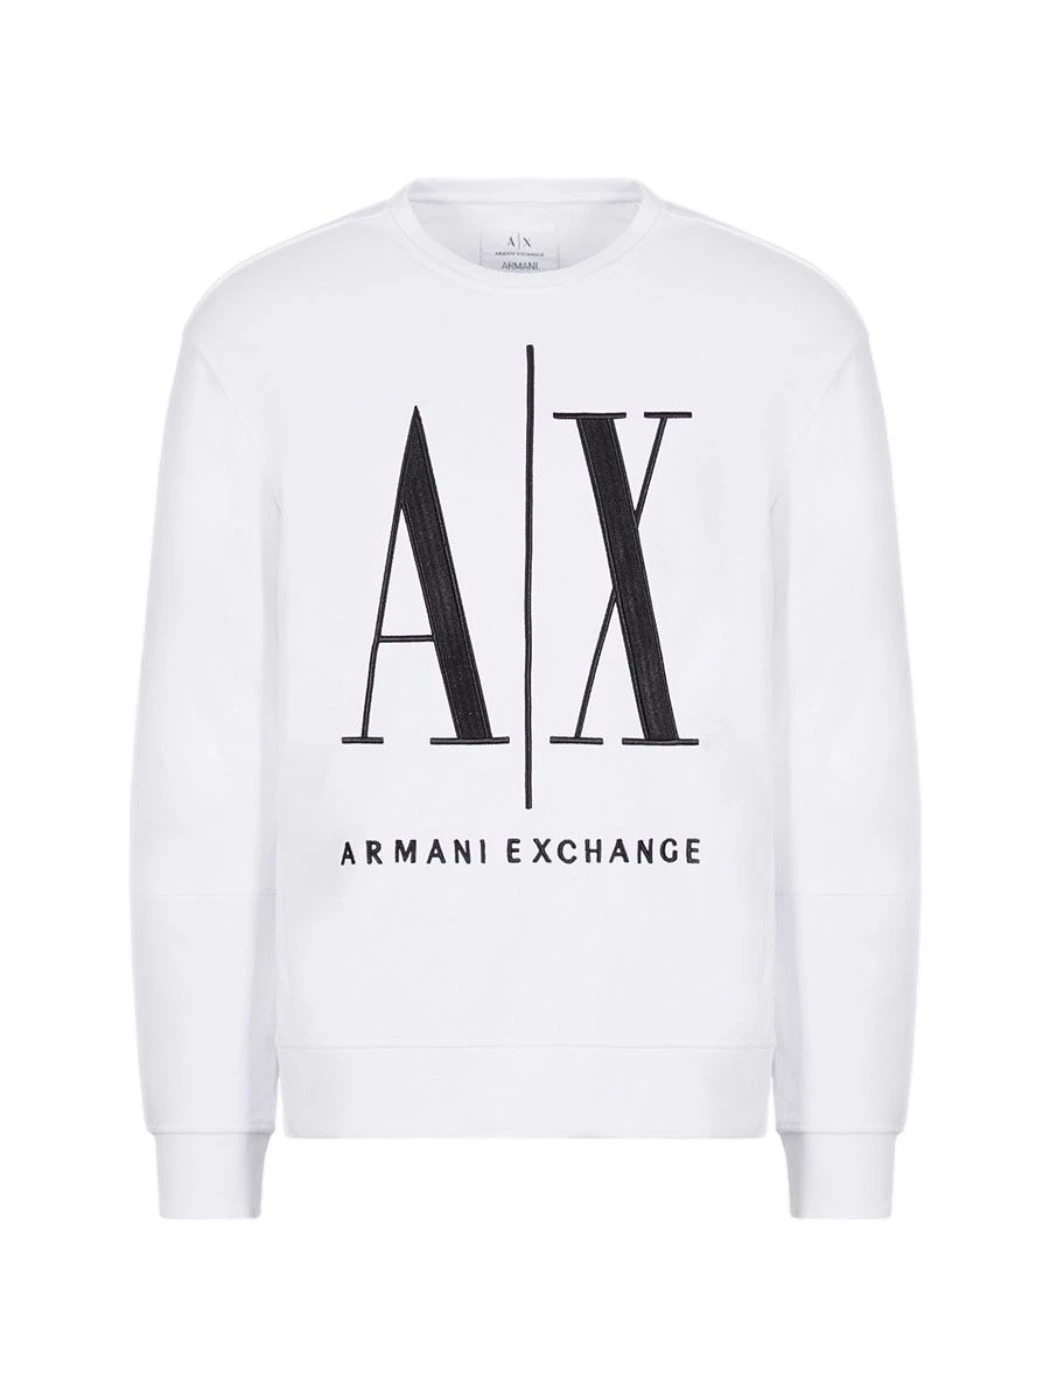 Armani Exchange cotton crew-neck sweatshirt